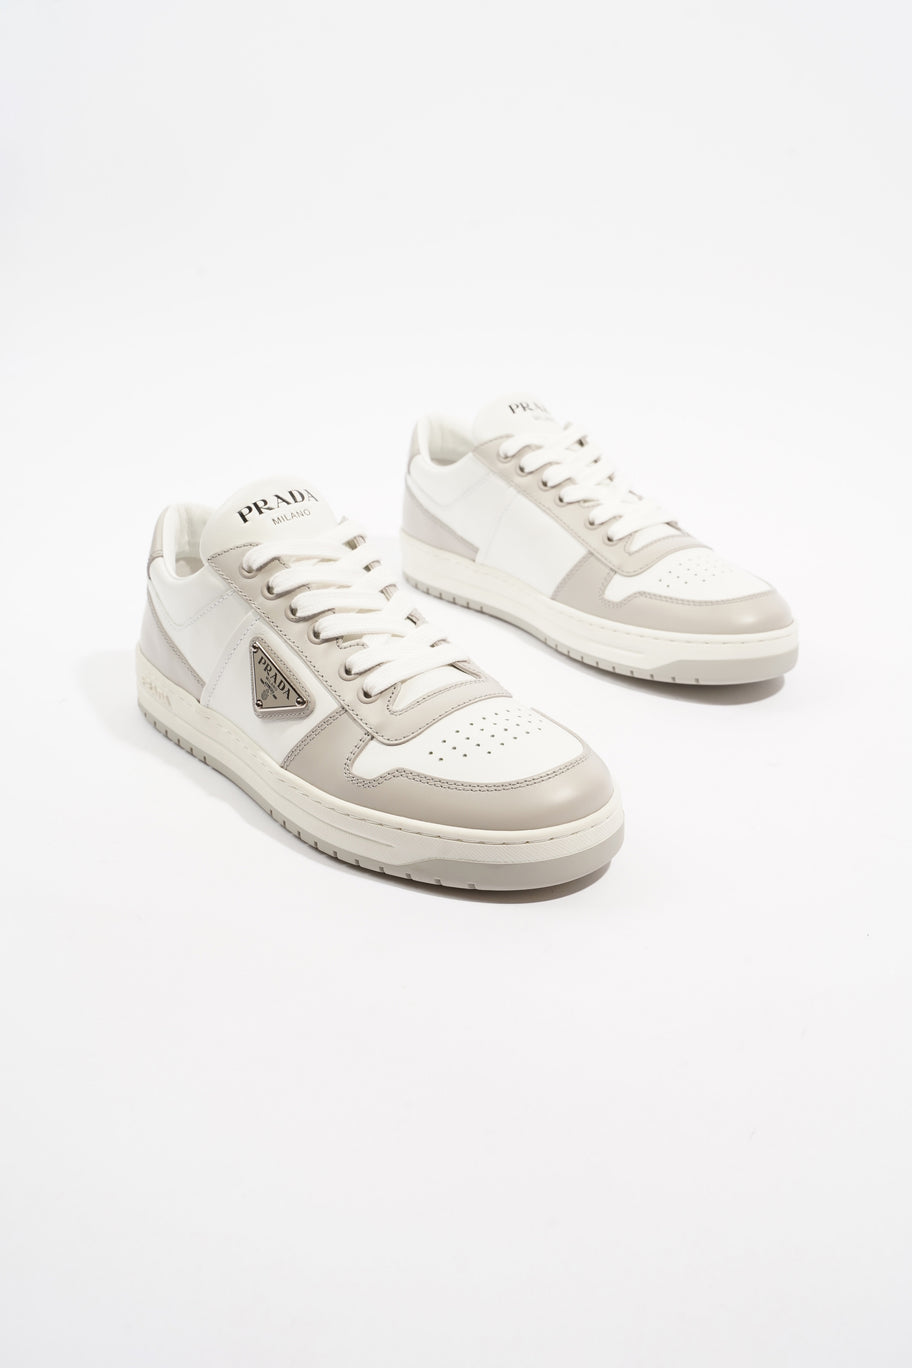 Downtown Sneaker White / Grey Leather EU 40 UK 7 Image 2